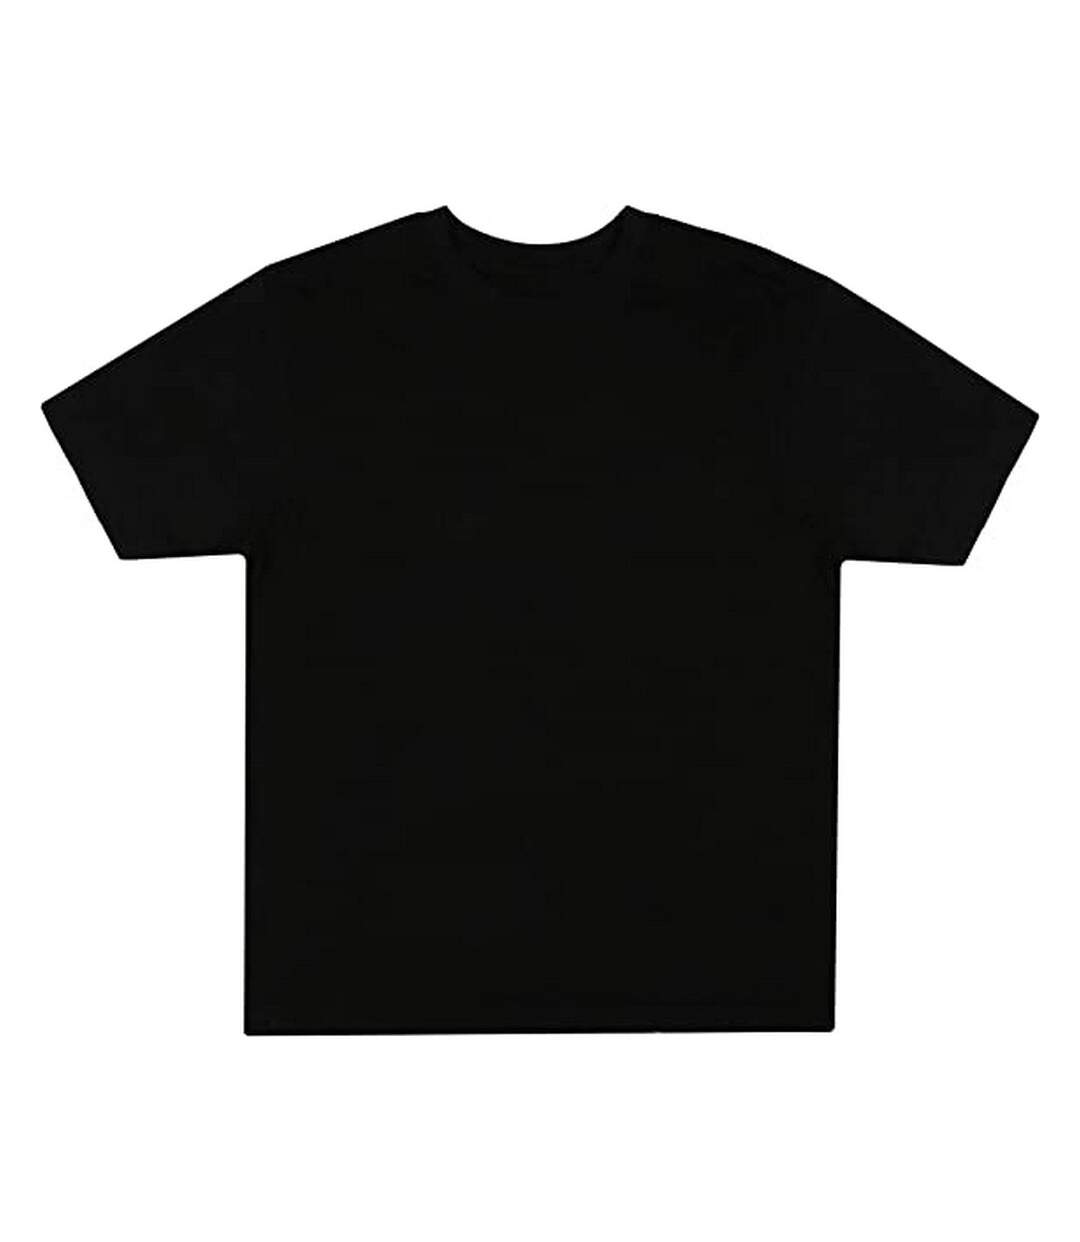 Zoo York - T-shirt LIBERTY - Homme (Noir) - UTTV1207